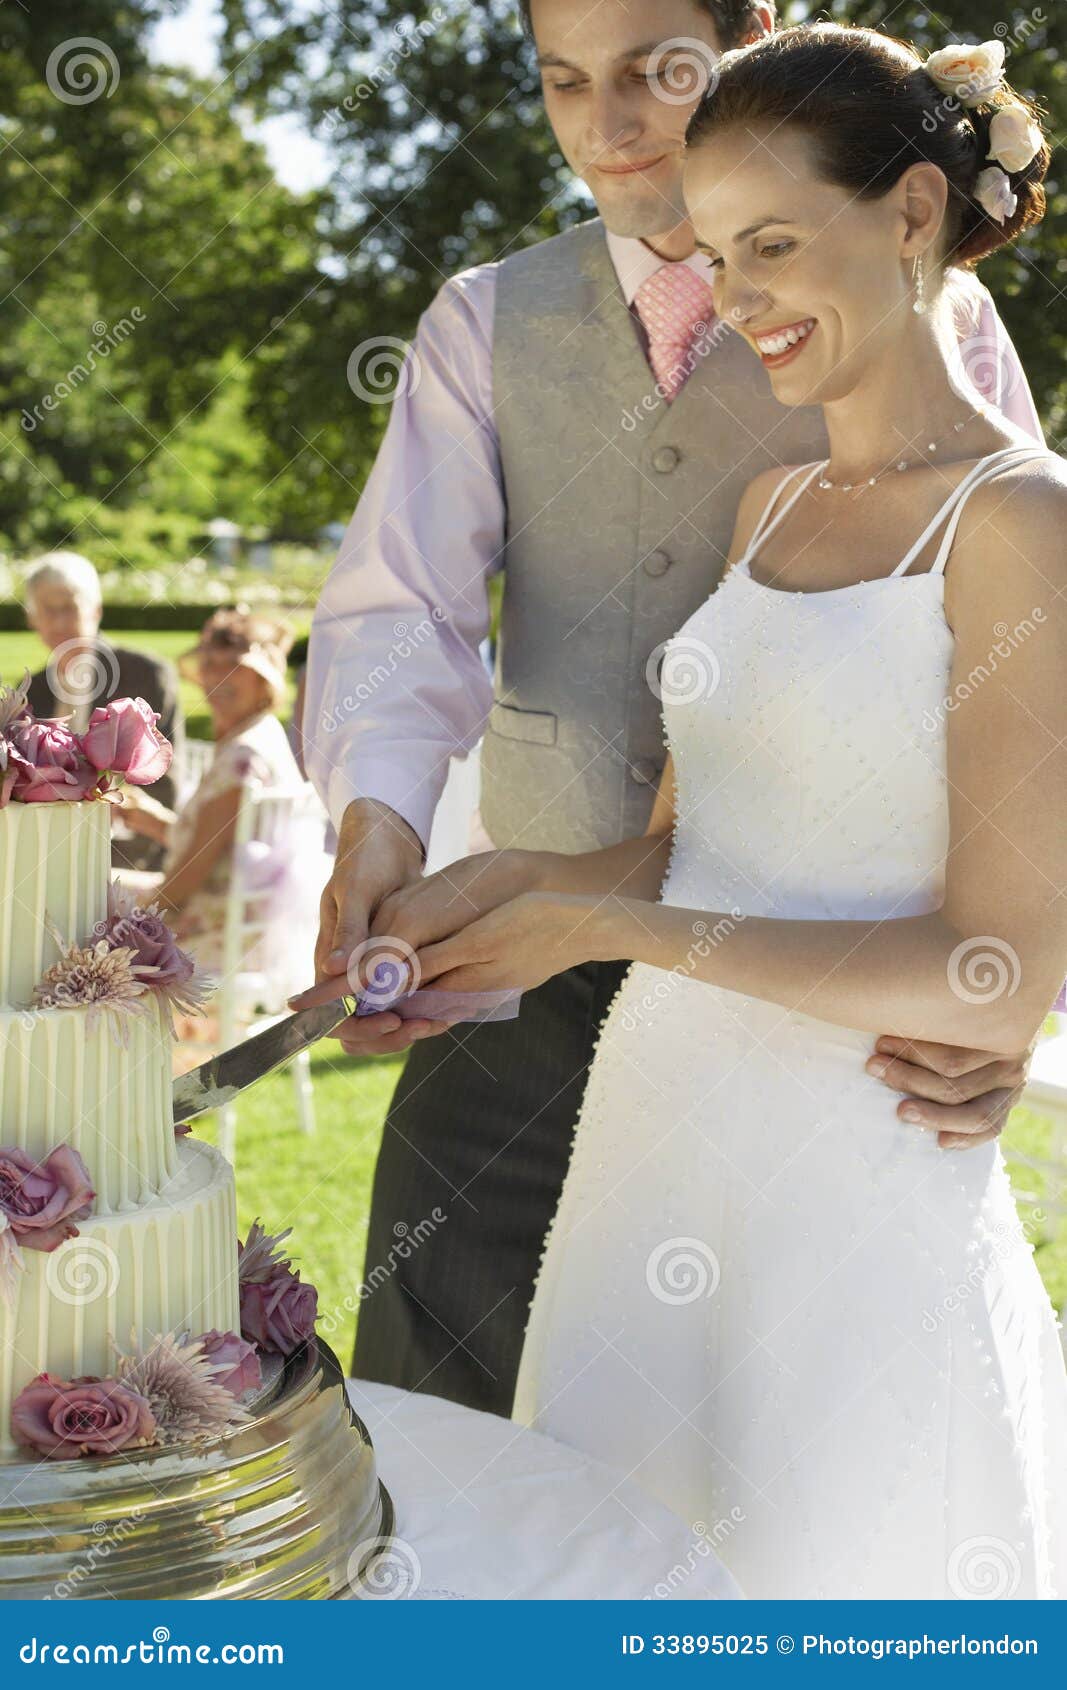 Wedding cake for bride